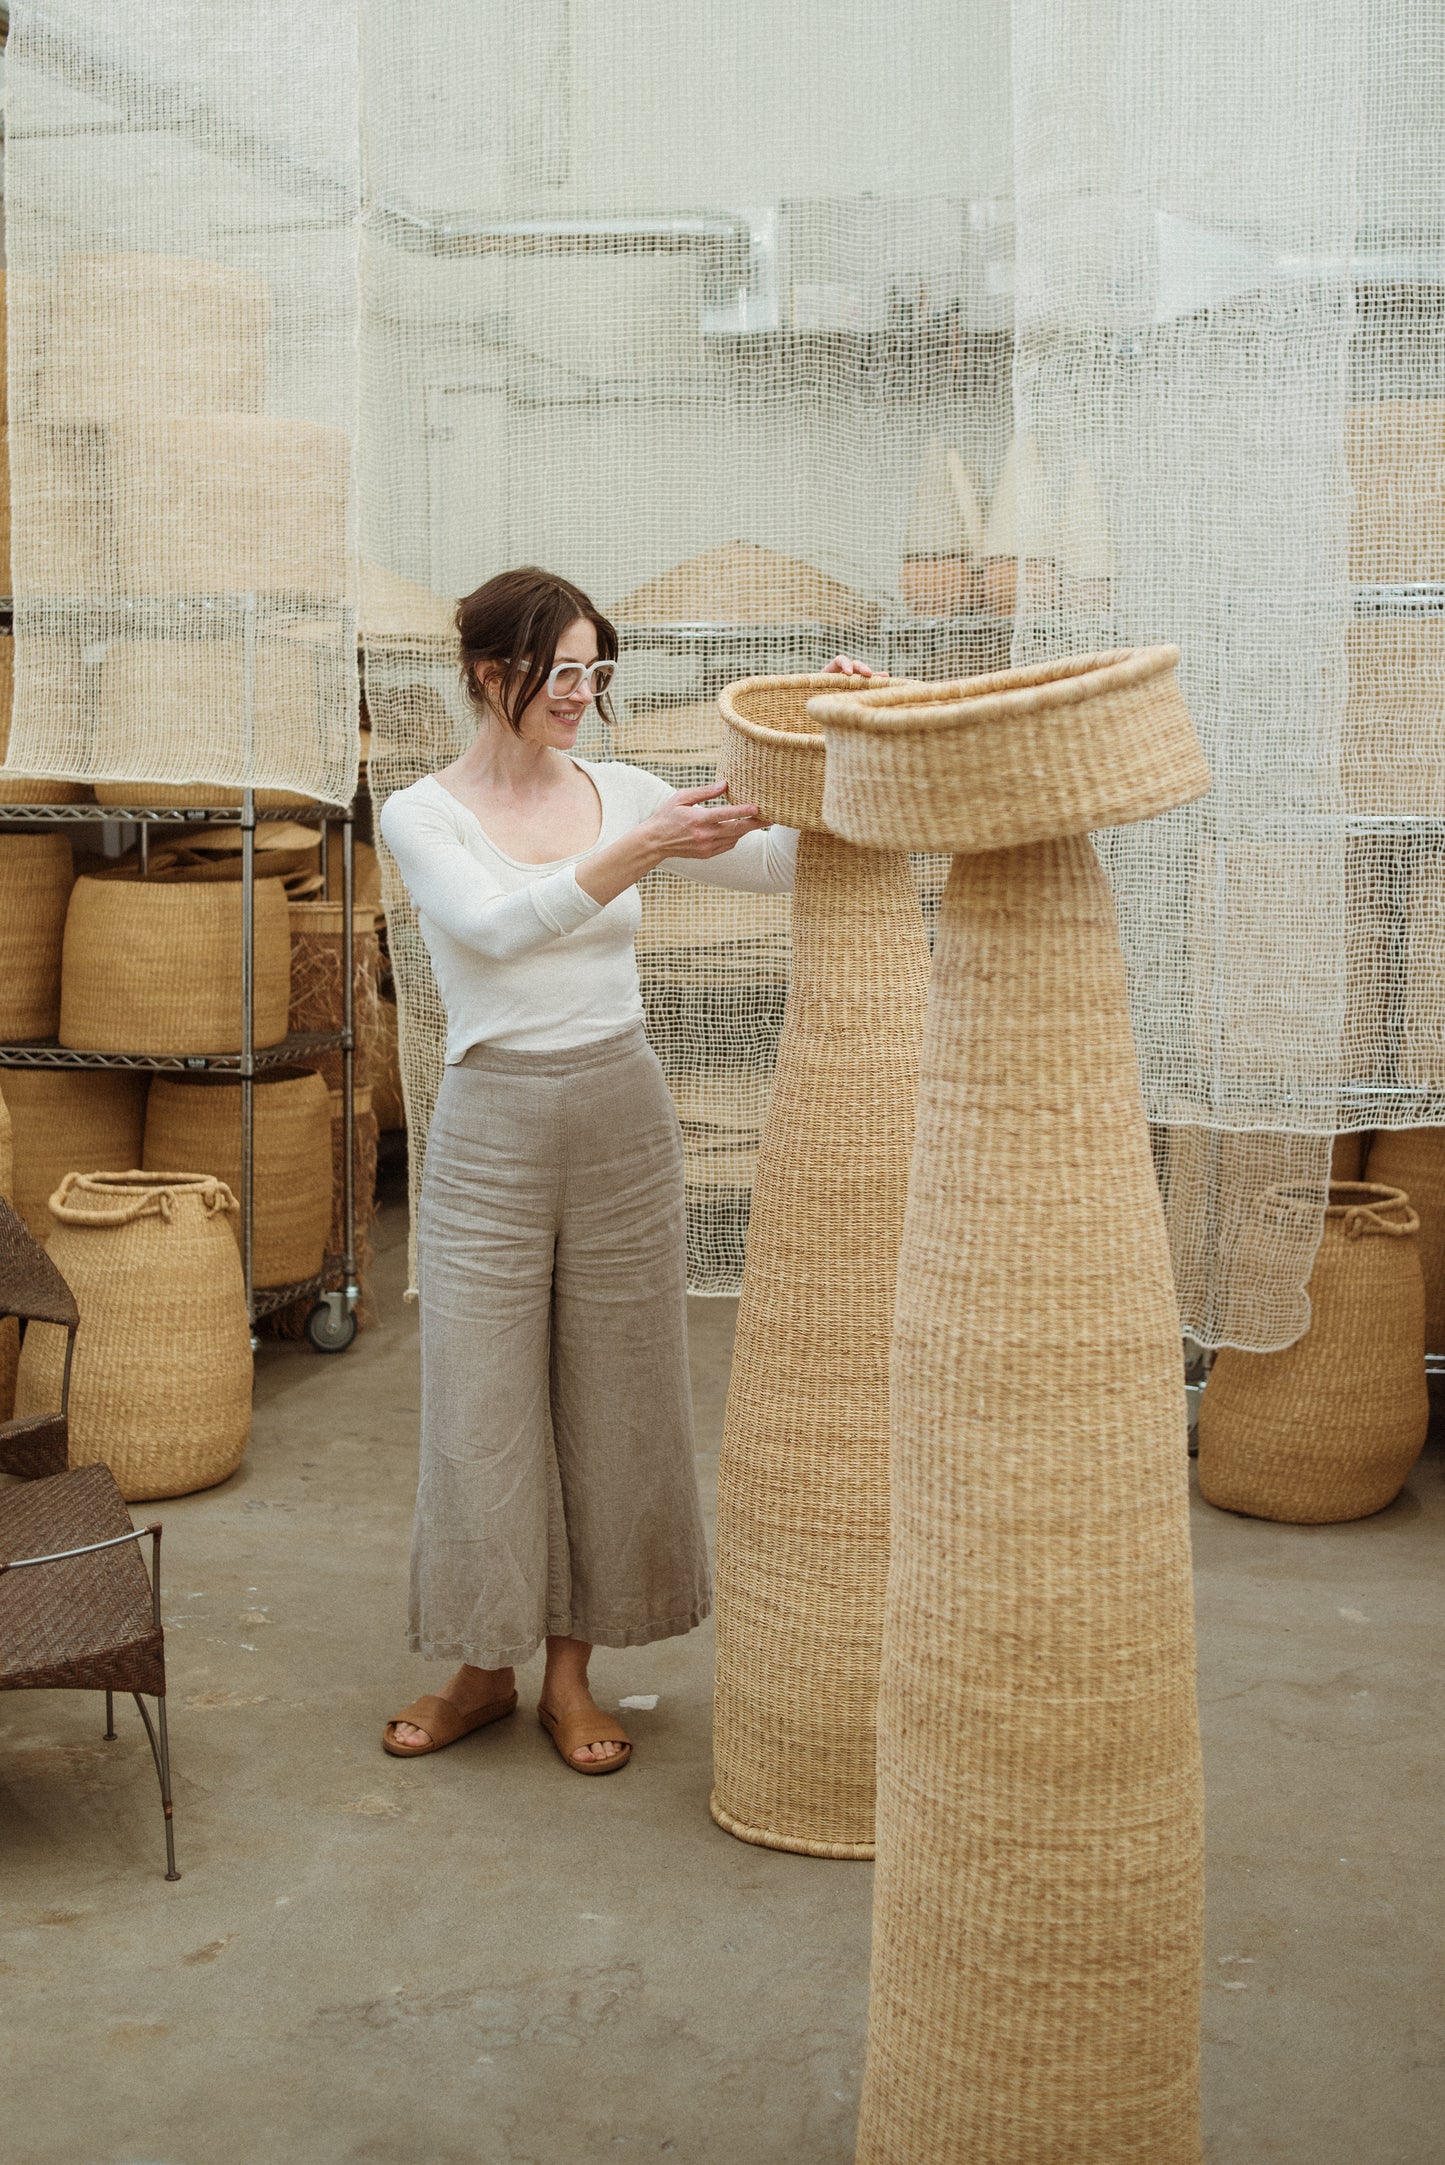 oversized woven basket sculptures